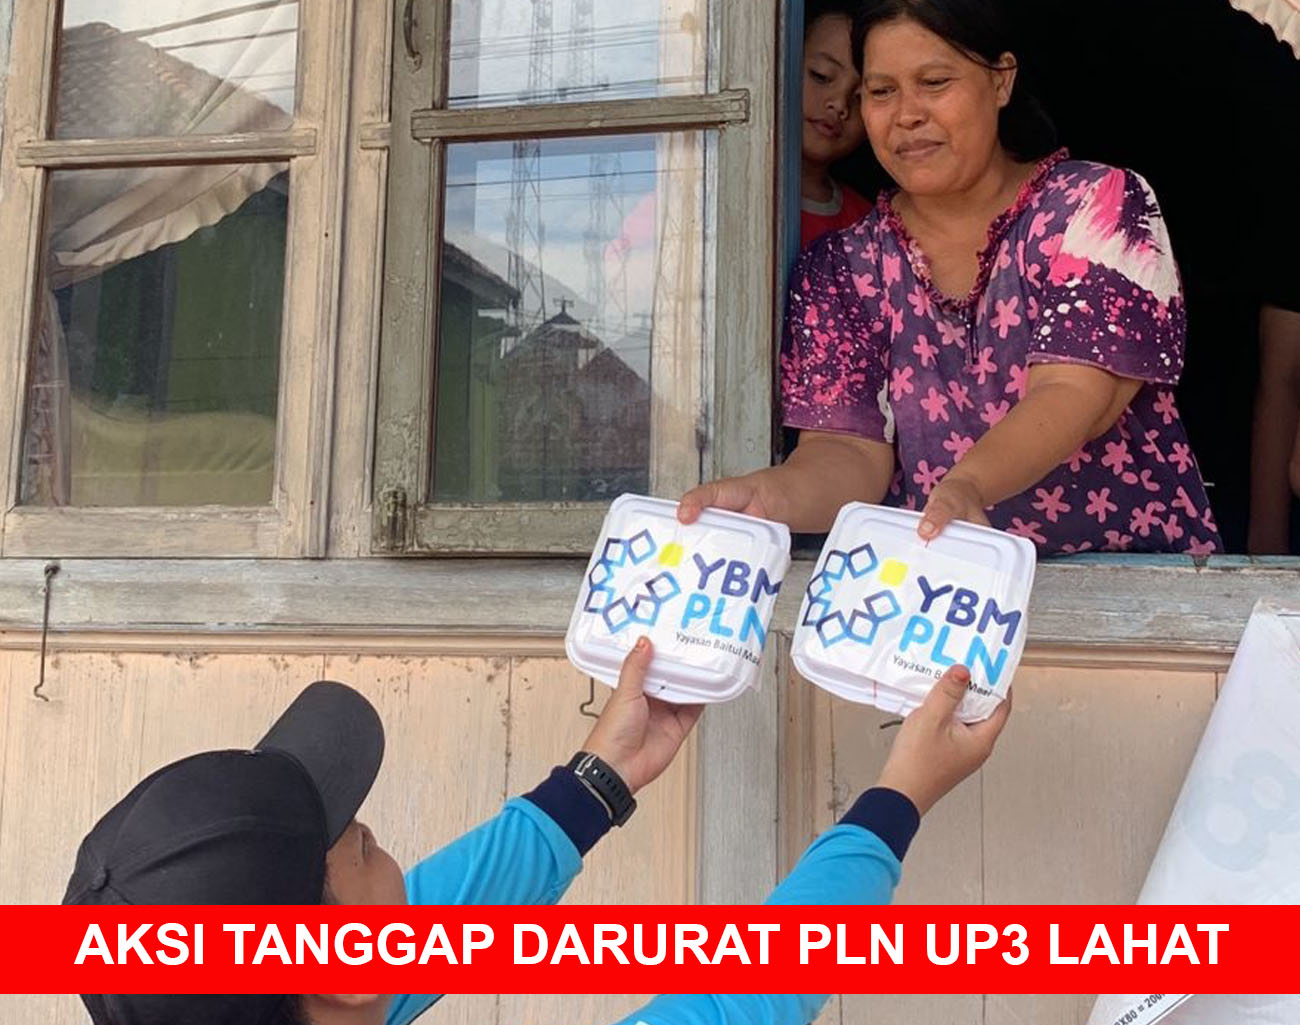 Aksi Tanggap Darurat, PLN UP3 Lahat Salurkan Bantuan Korban Banjir Bandang Muratara Bersama YBM PLN